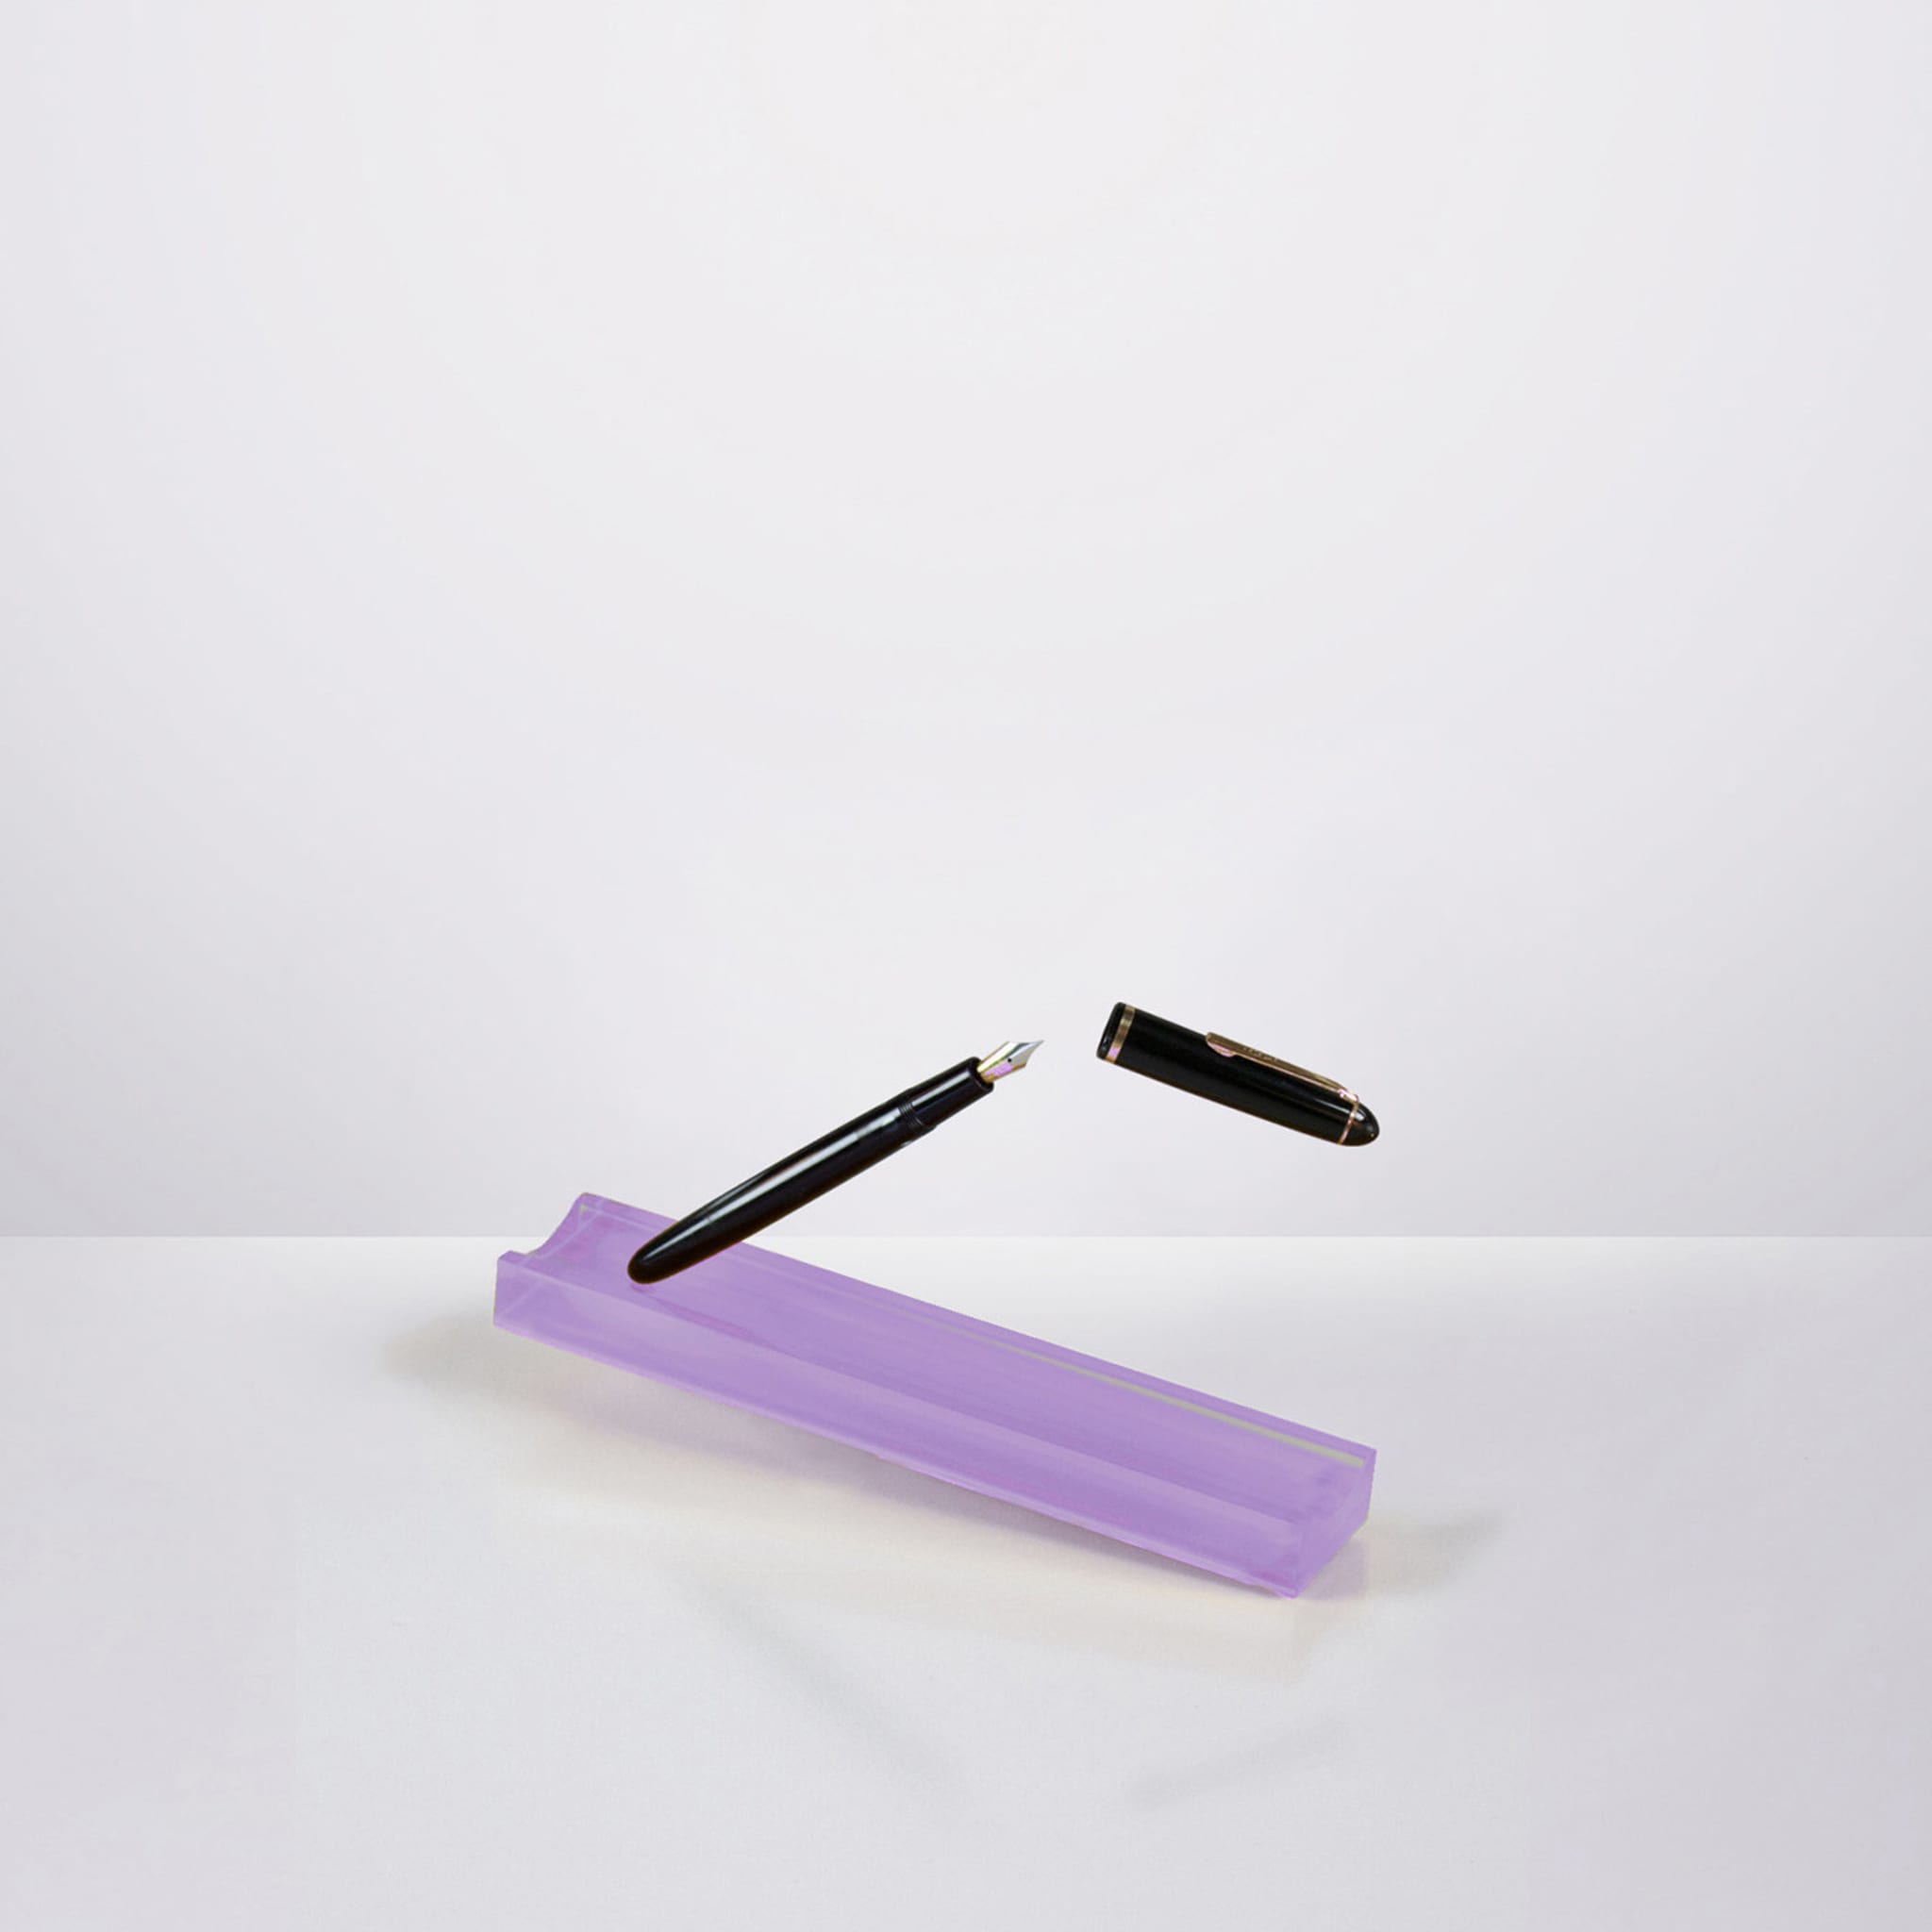 Porte-stylo Presto T violet - Vue alternative 2